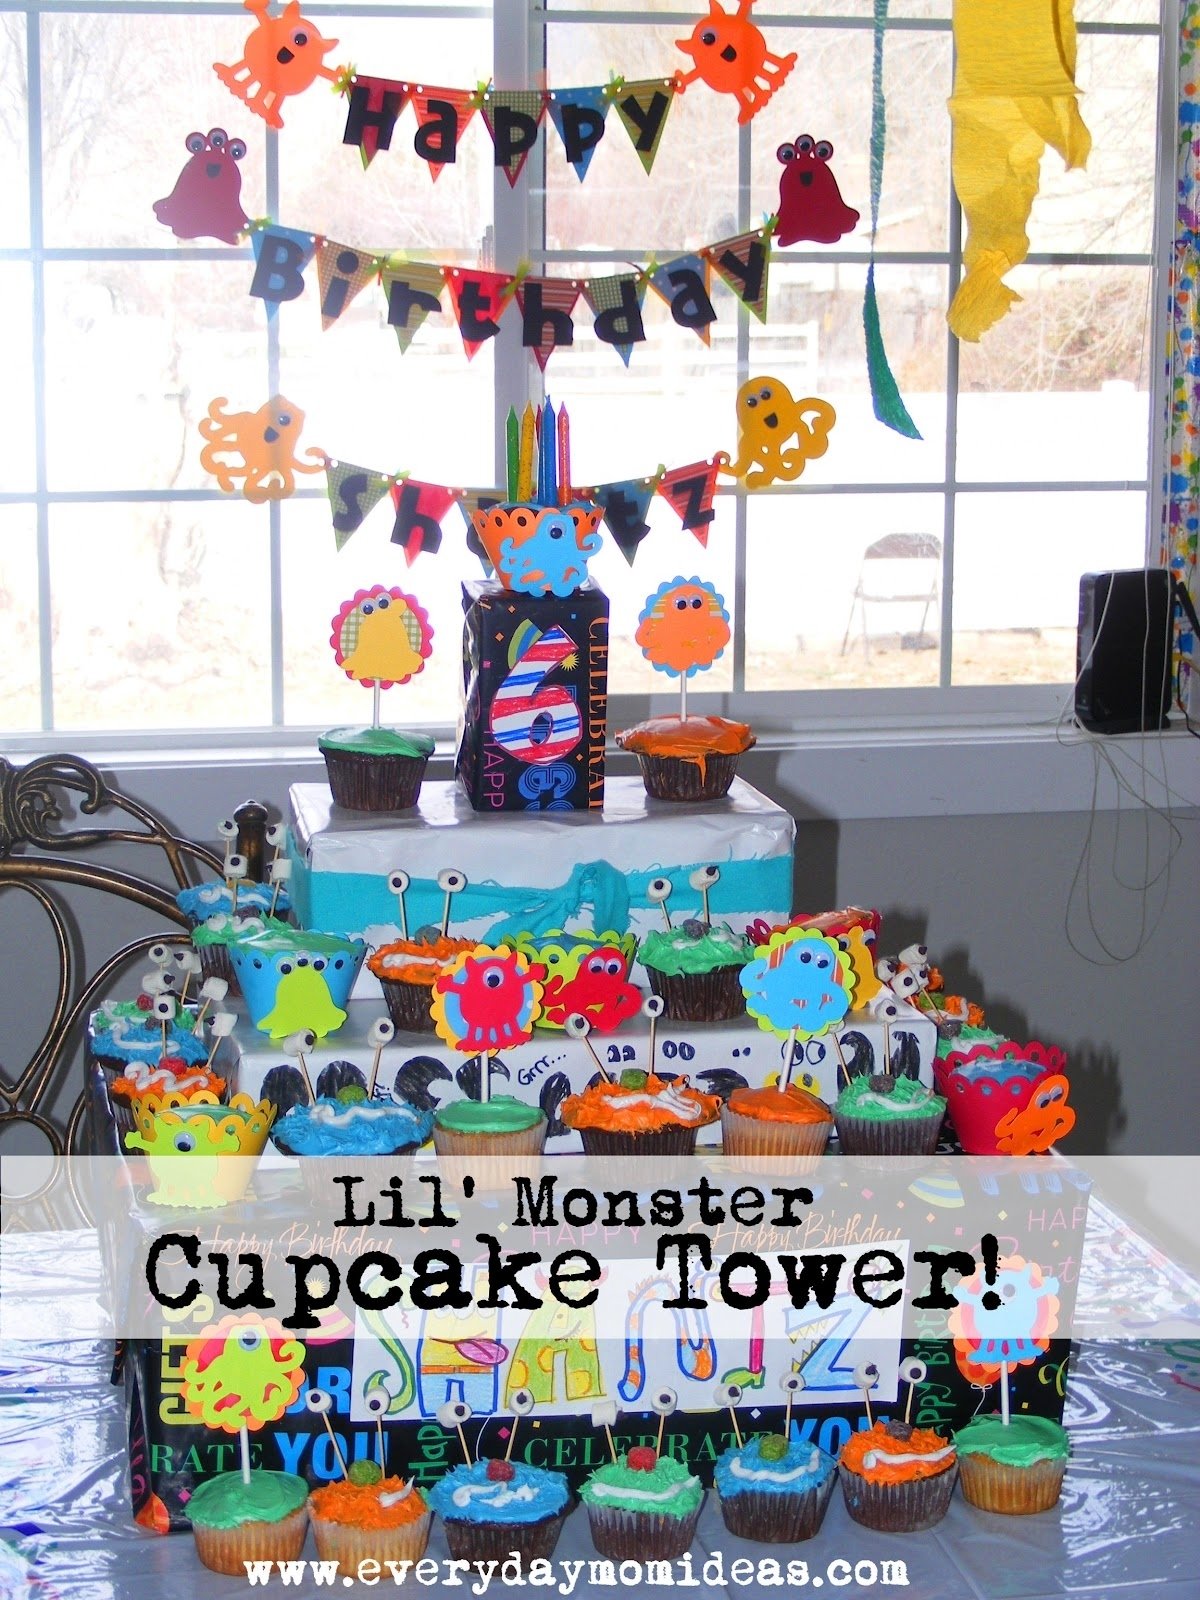 10 Lovable Birthday Ideas For A 1 Year Old little monster bash birthday party ideas everyday mom ideas 3 2022